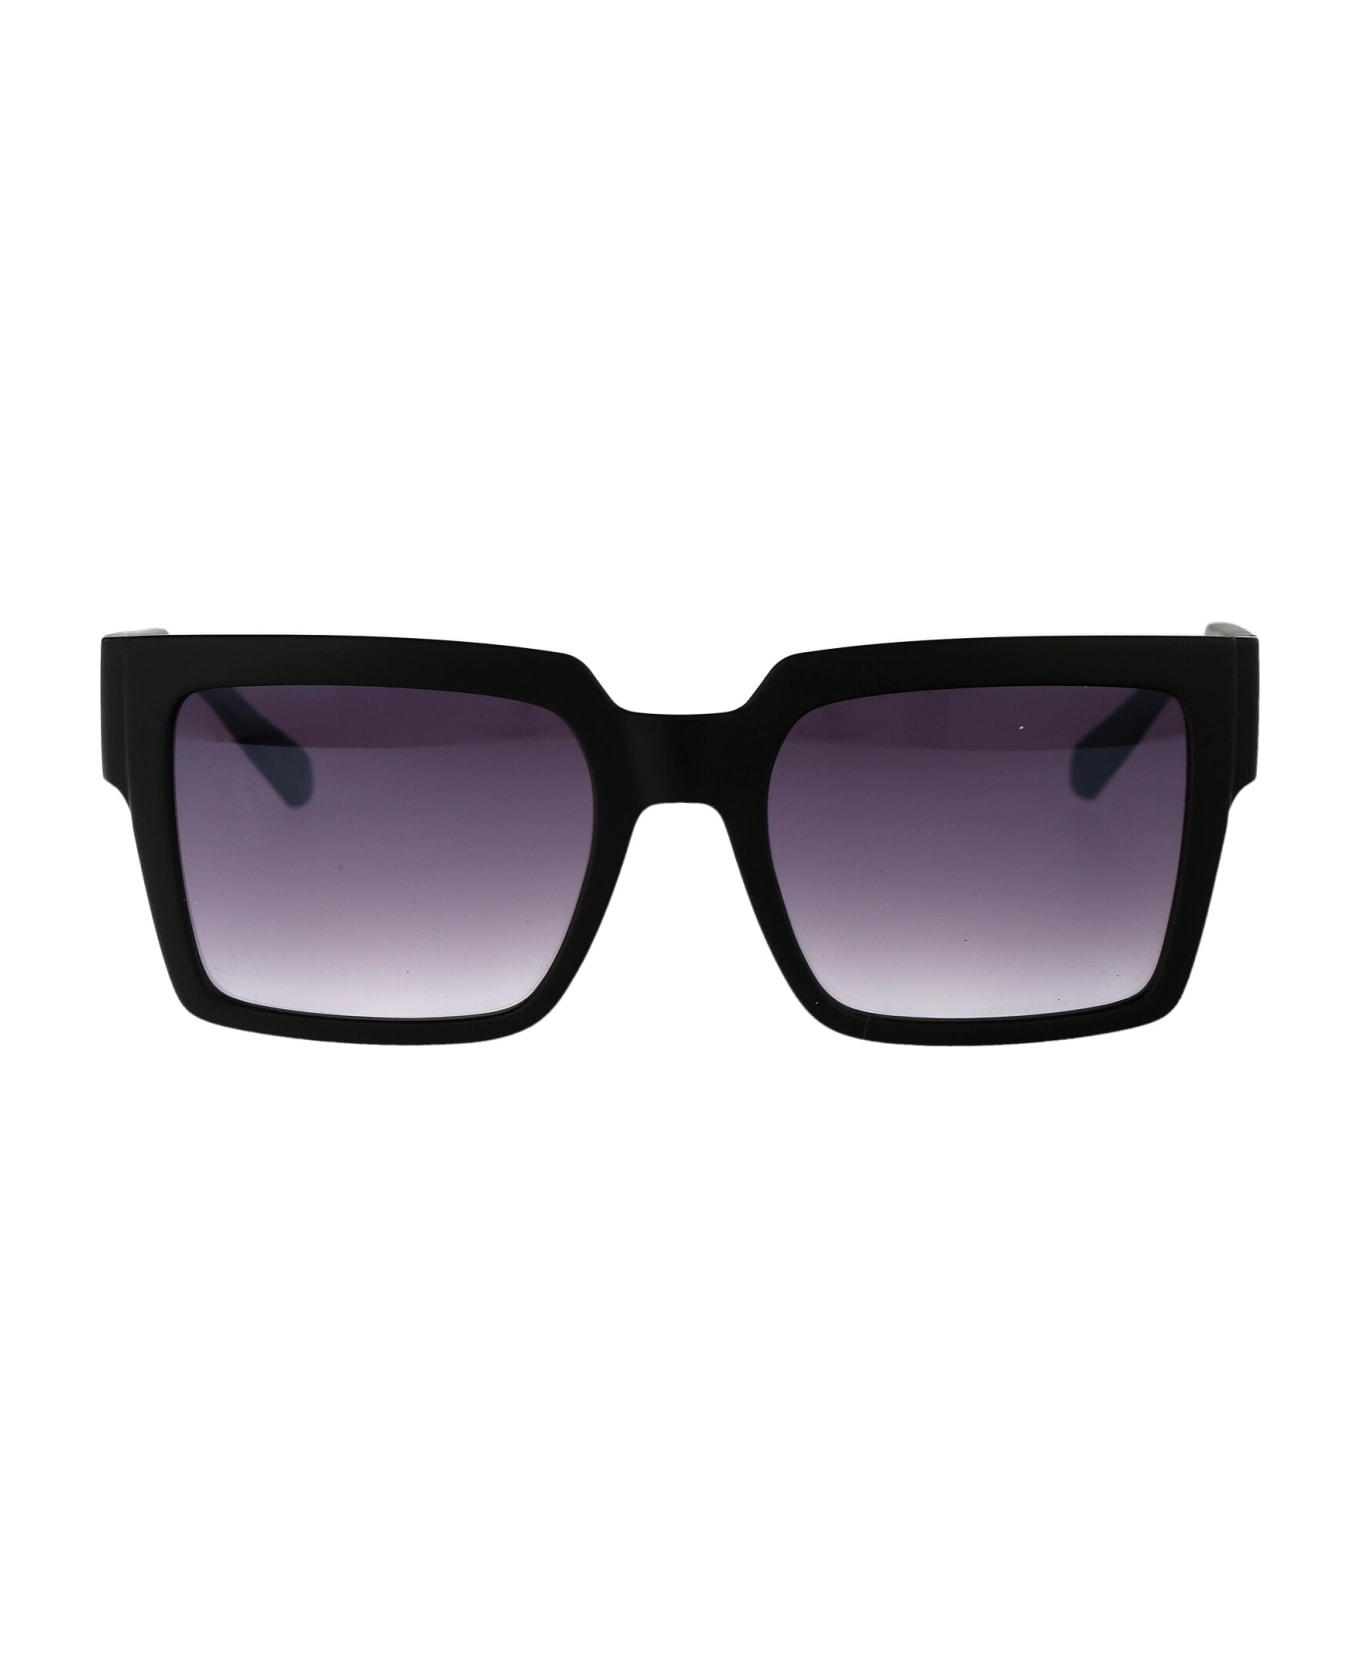 Calvin Klein Jeans Ckj23622s Sunglasses - 002 MATTE BLACK